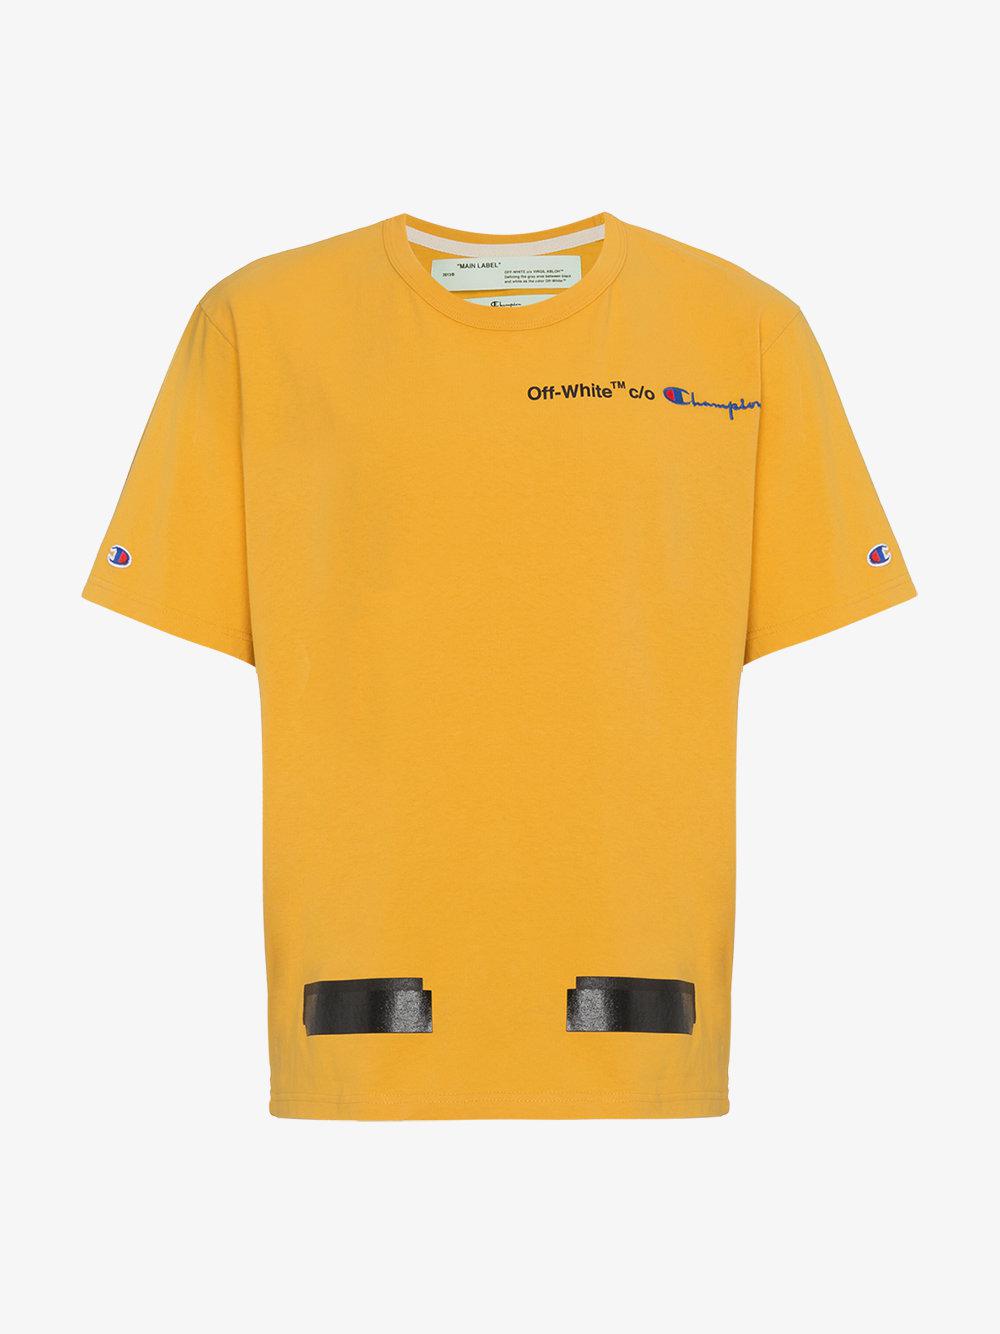 Off-White c/o Virgil Abloh X Champion Yellow T-shirt for Men | Lyst